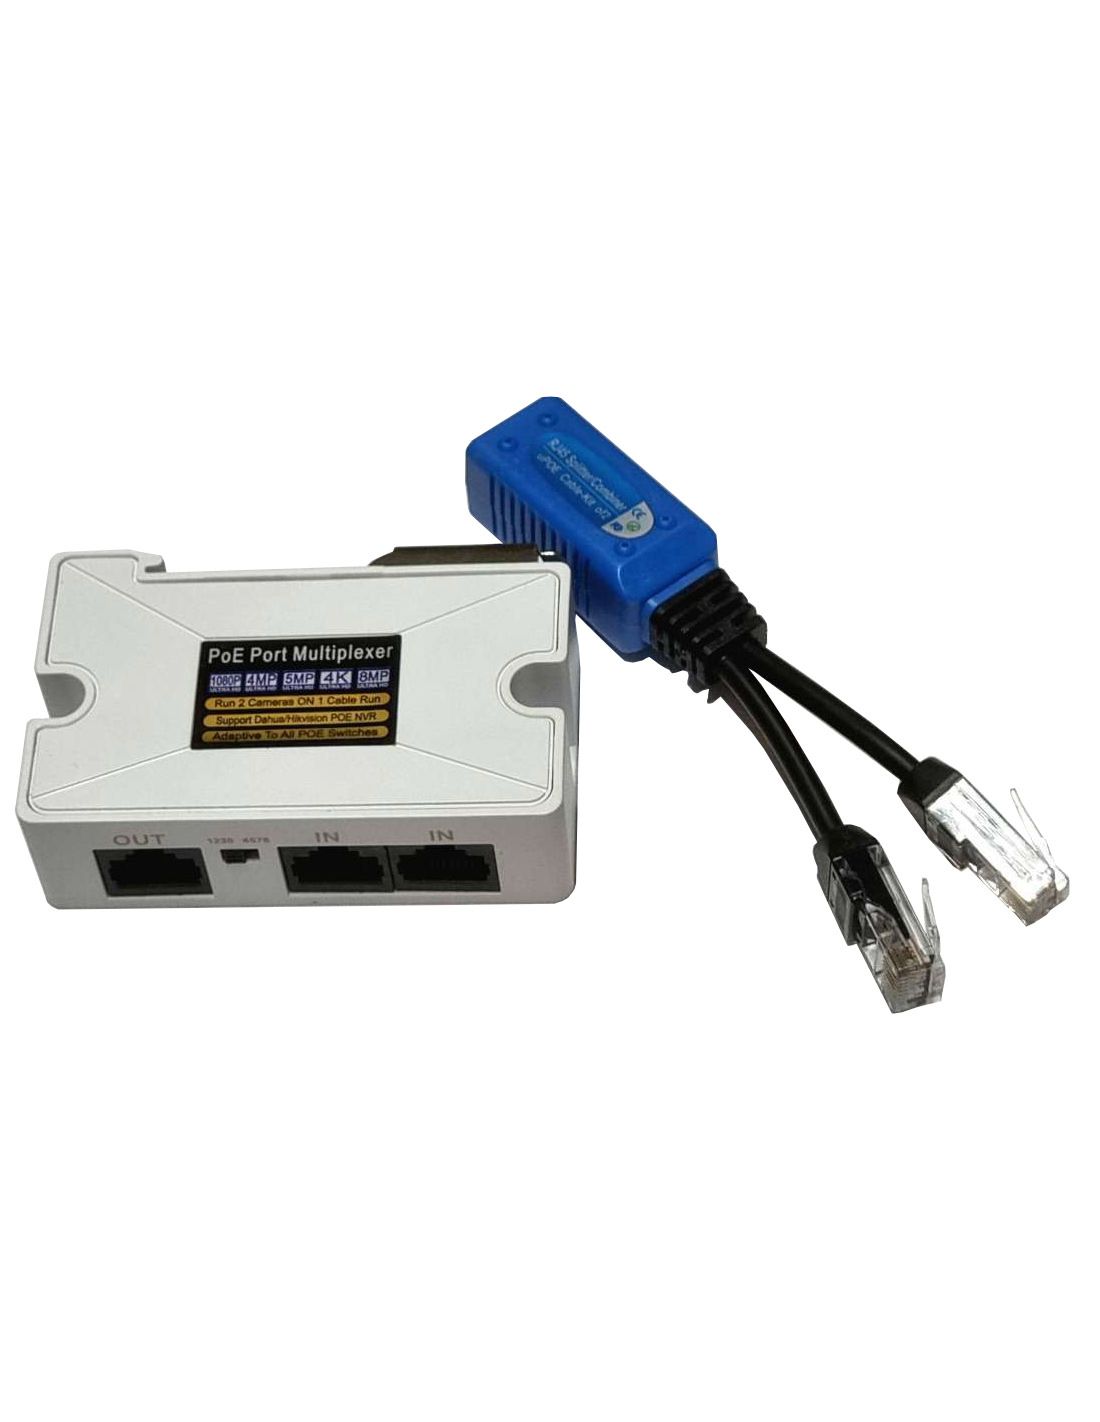 ethernet splitter poe port multiplexer use 2 cameras over 1 cable rj45 socket 2x male rj45